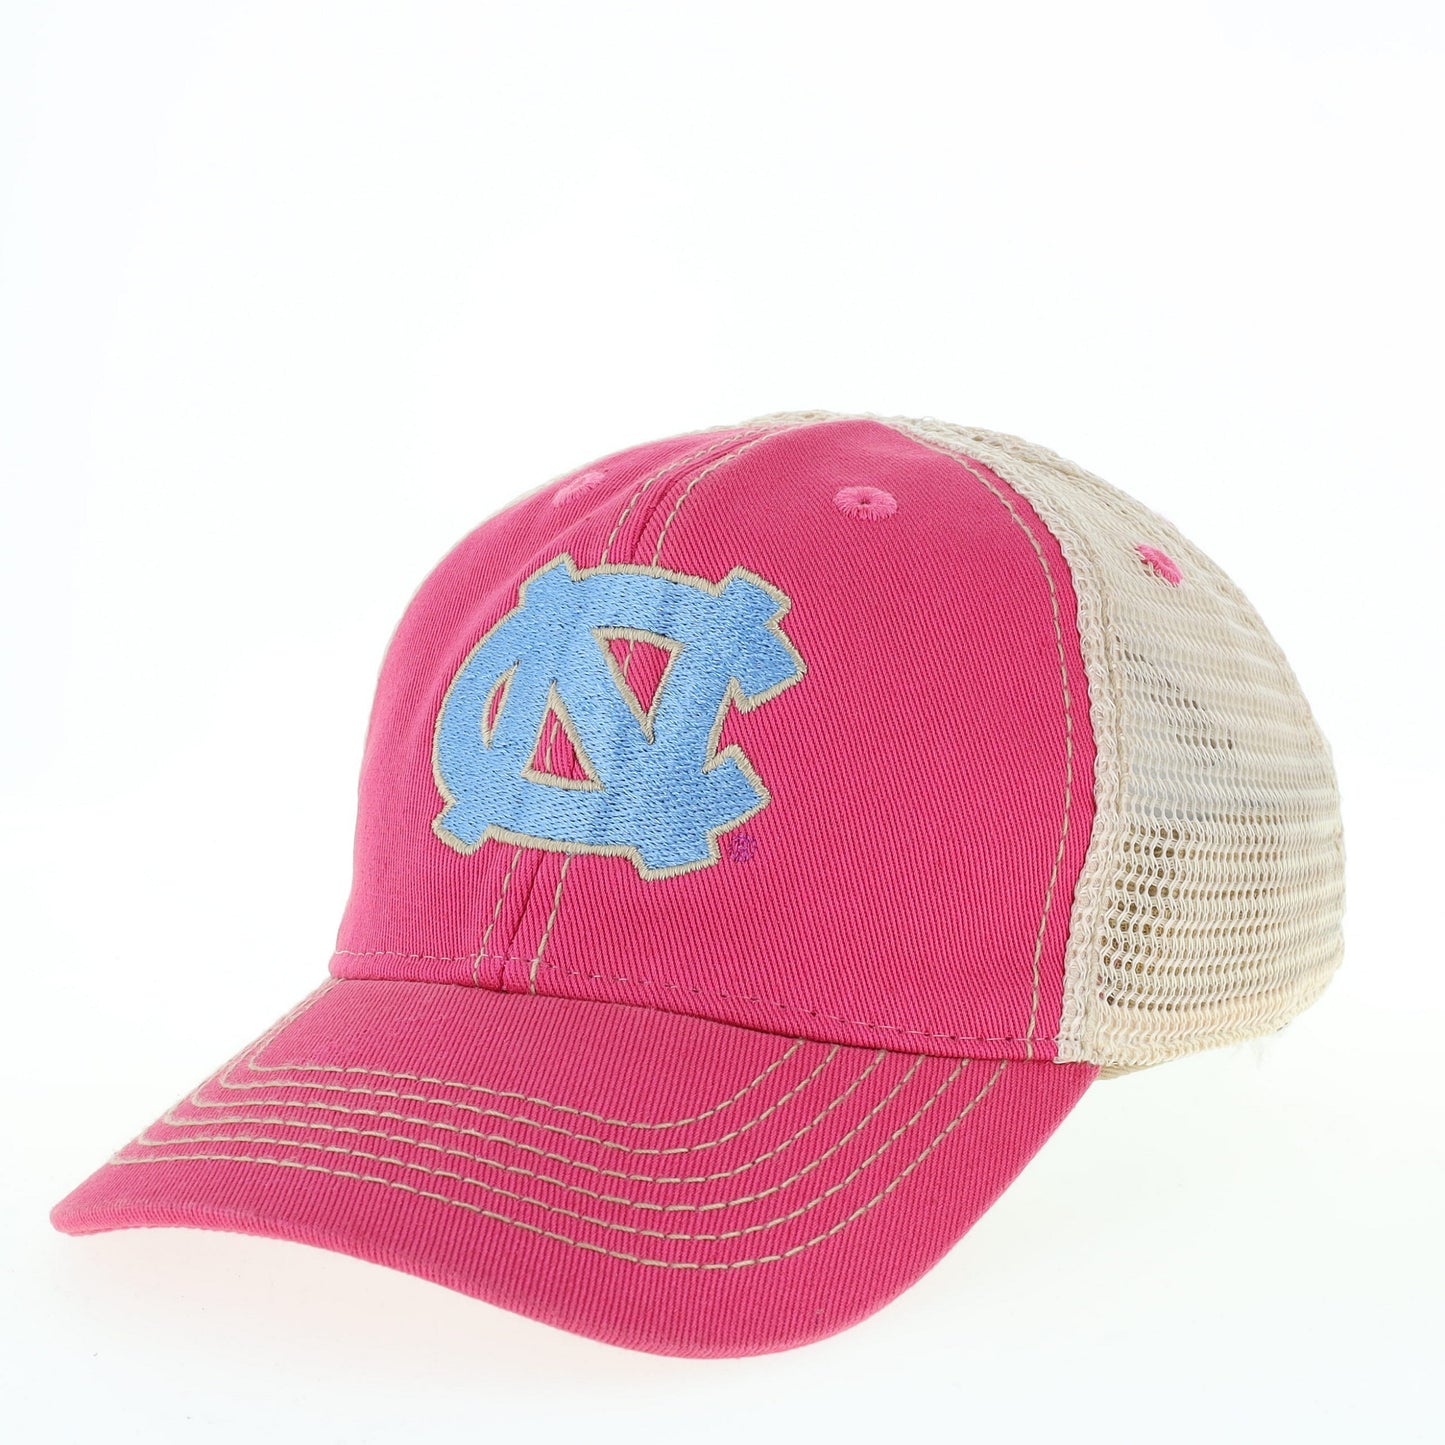 North Carolina Tar Heels Pink Toddler Hat with Mesh Back